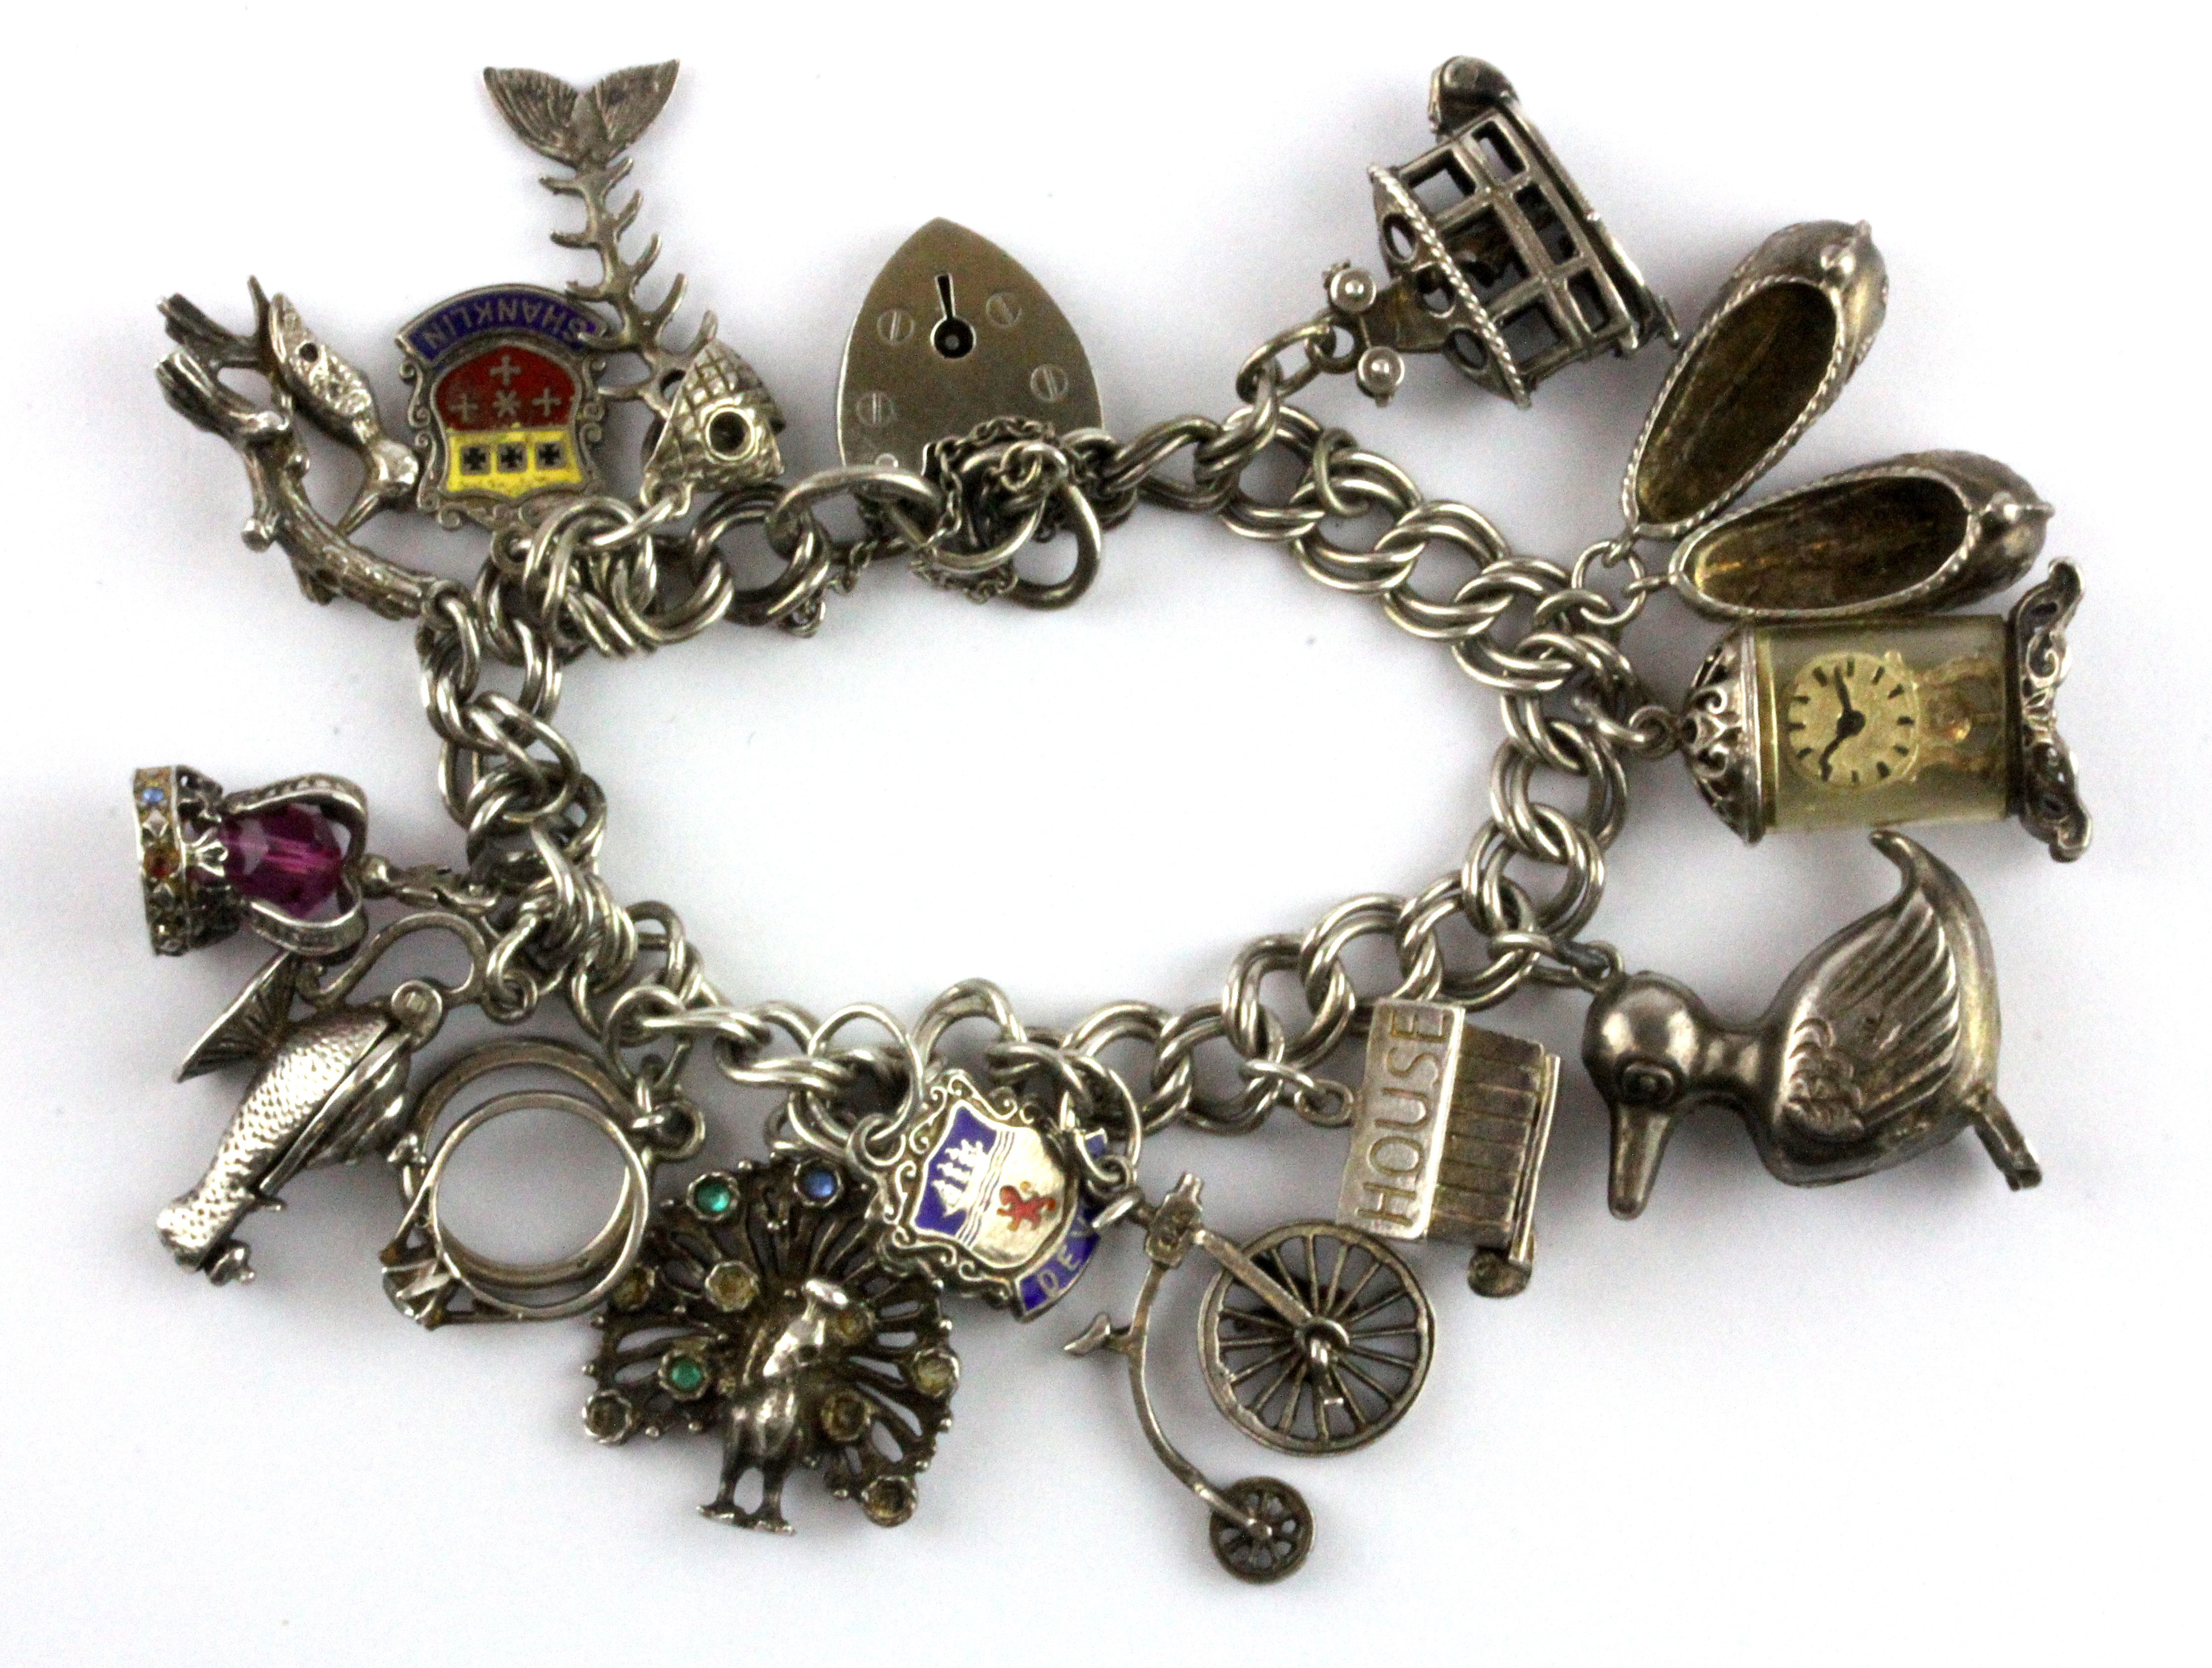 A hallmarked silver charm bracelet.